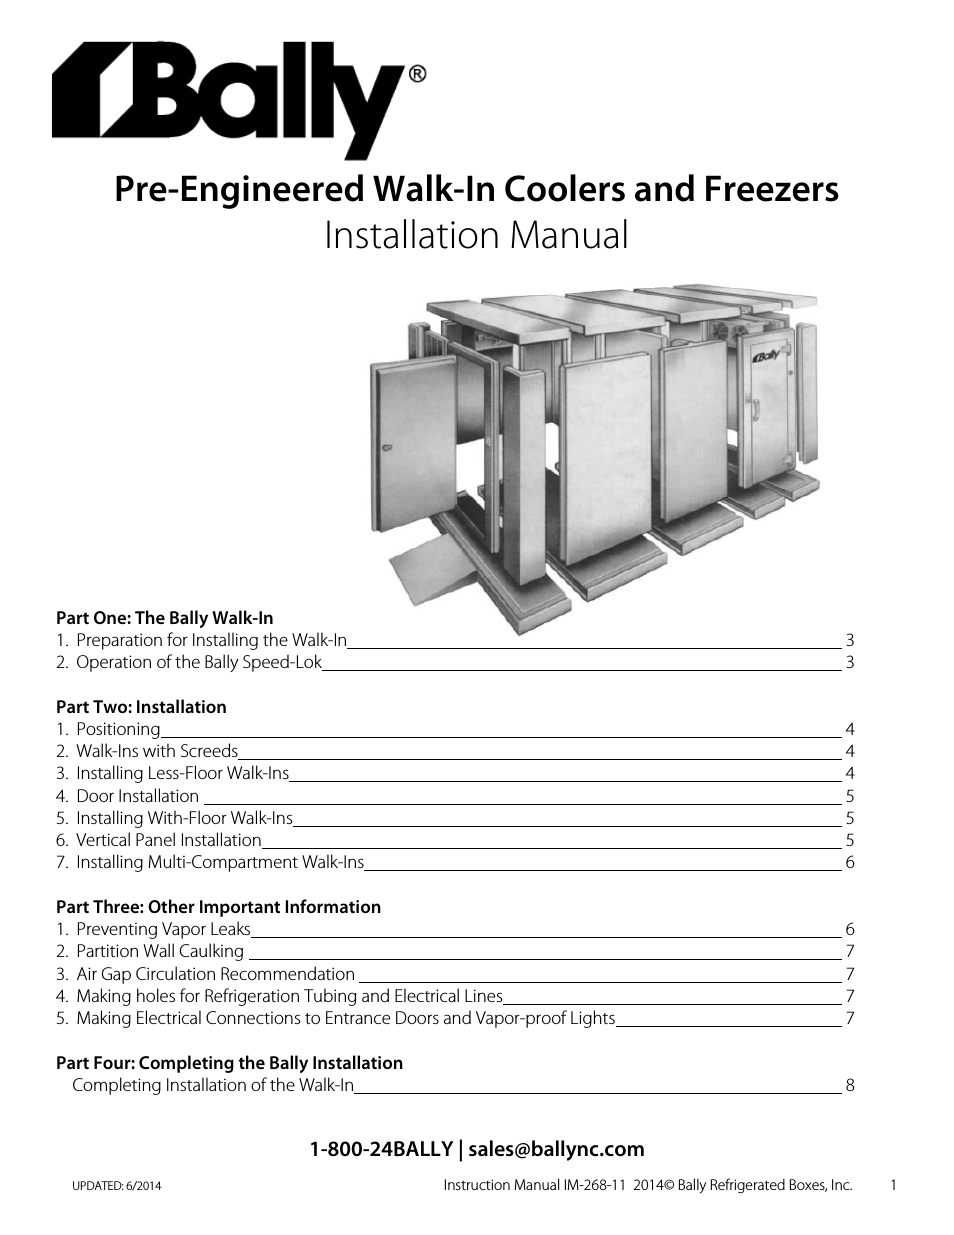 Walk-In Installation Manual